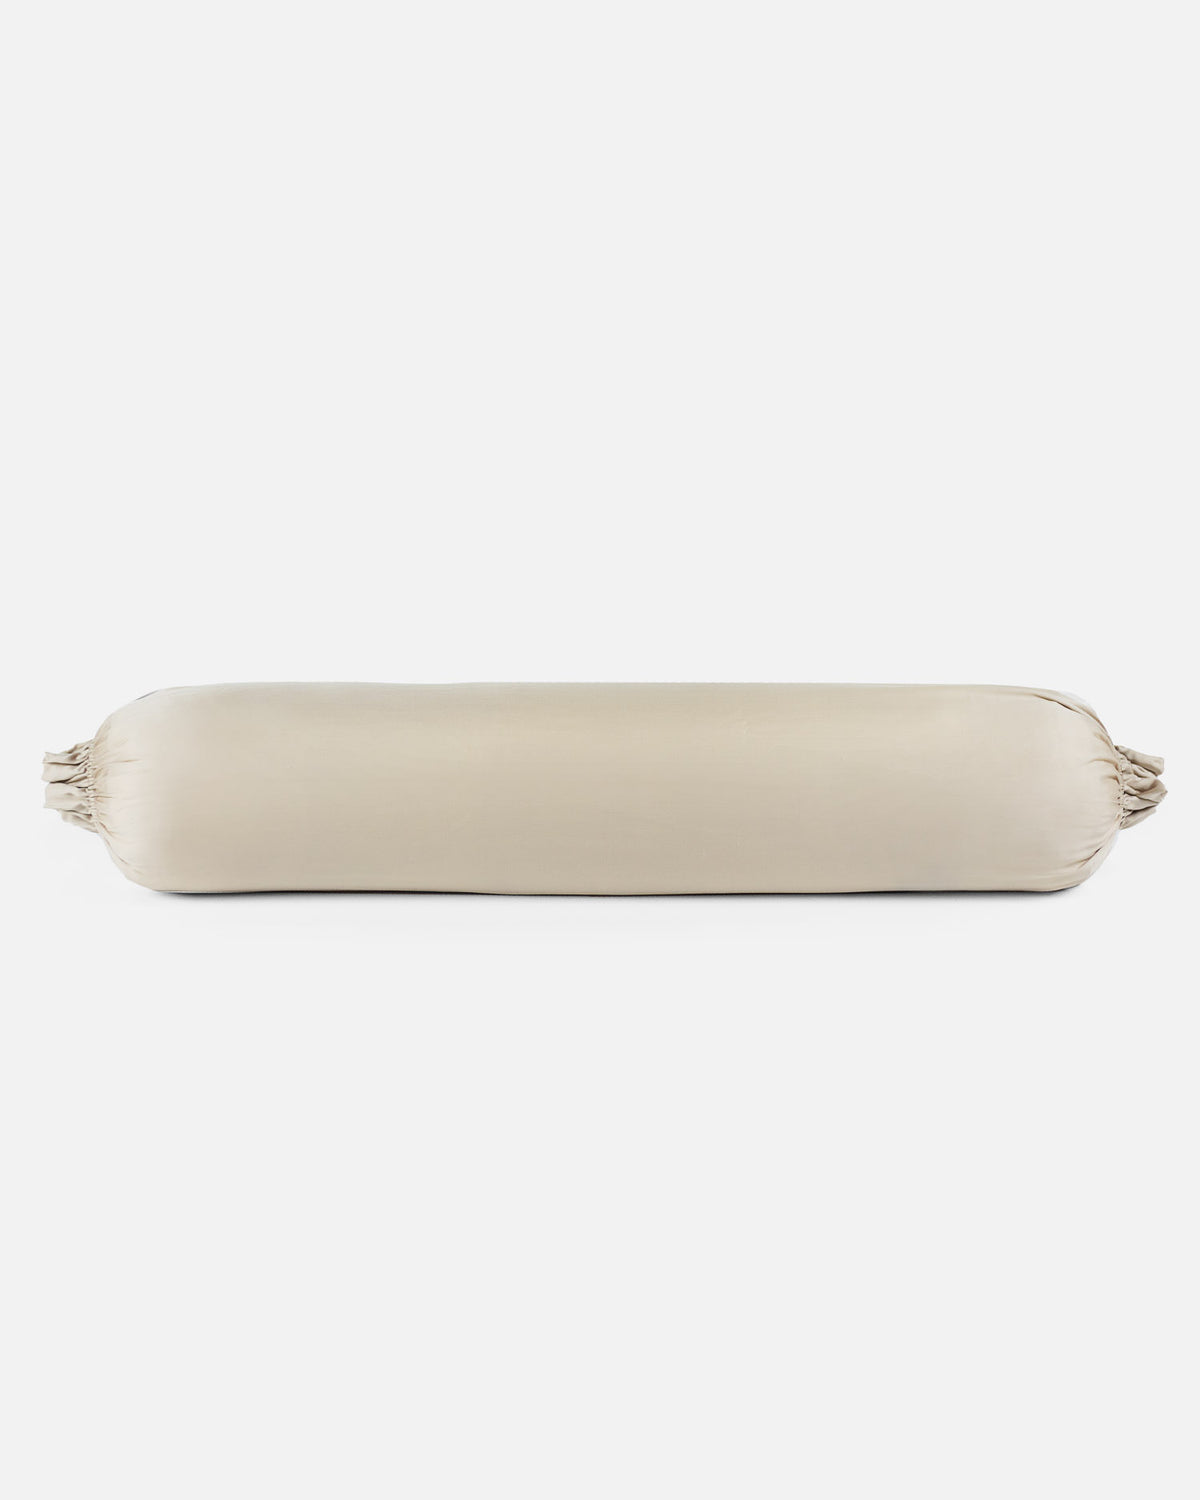 ava and ava ph organic bamboo lyocell bolster case / hotdog pillow / long pillow / po-tsim pillowcase in sand beige